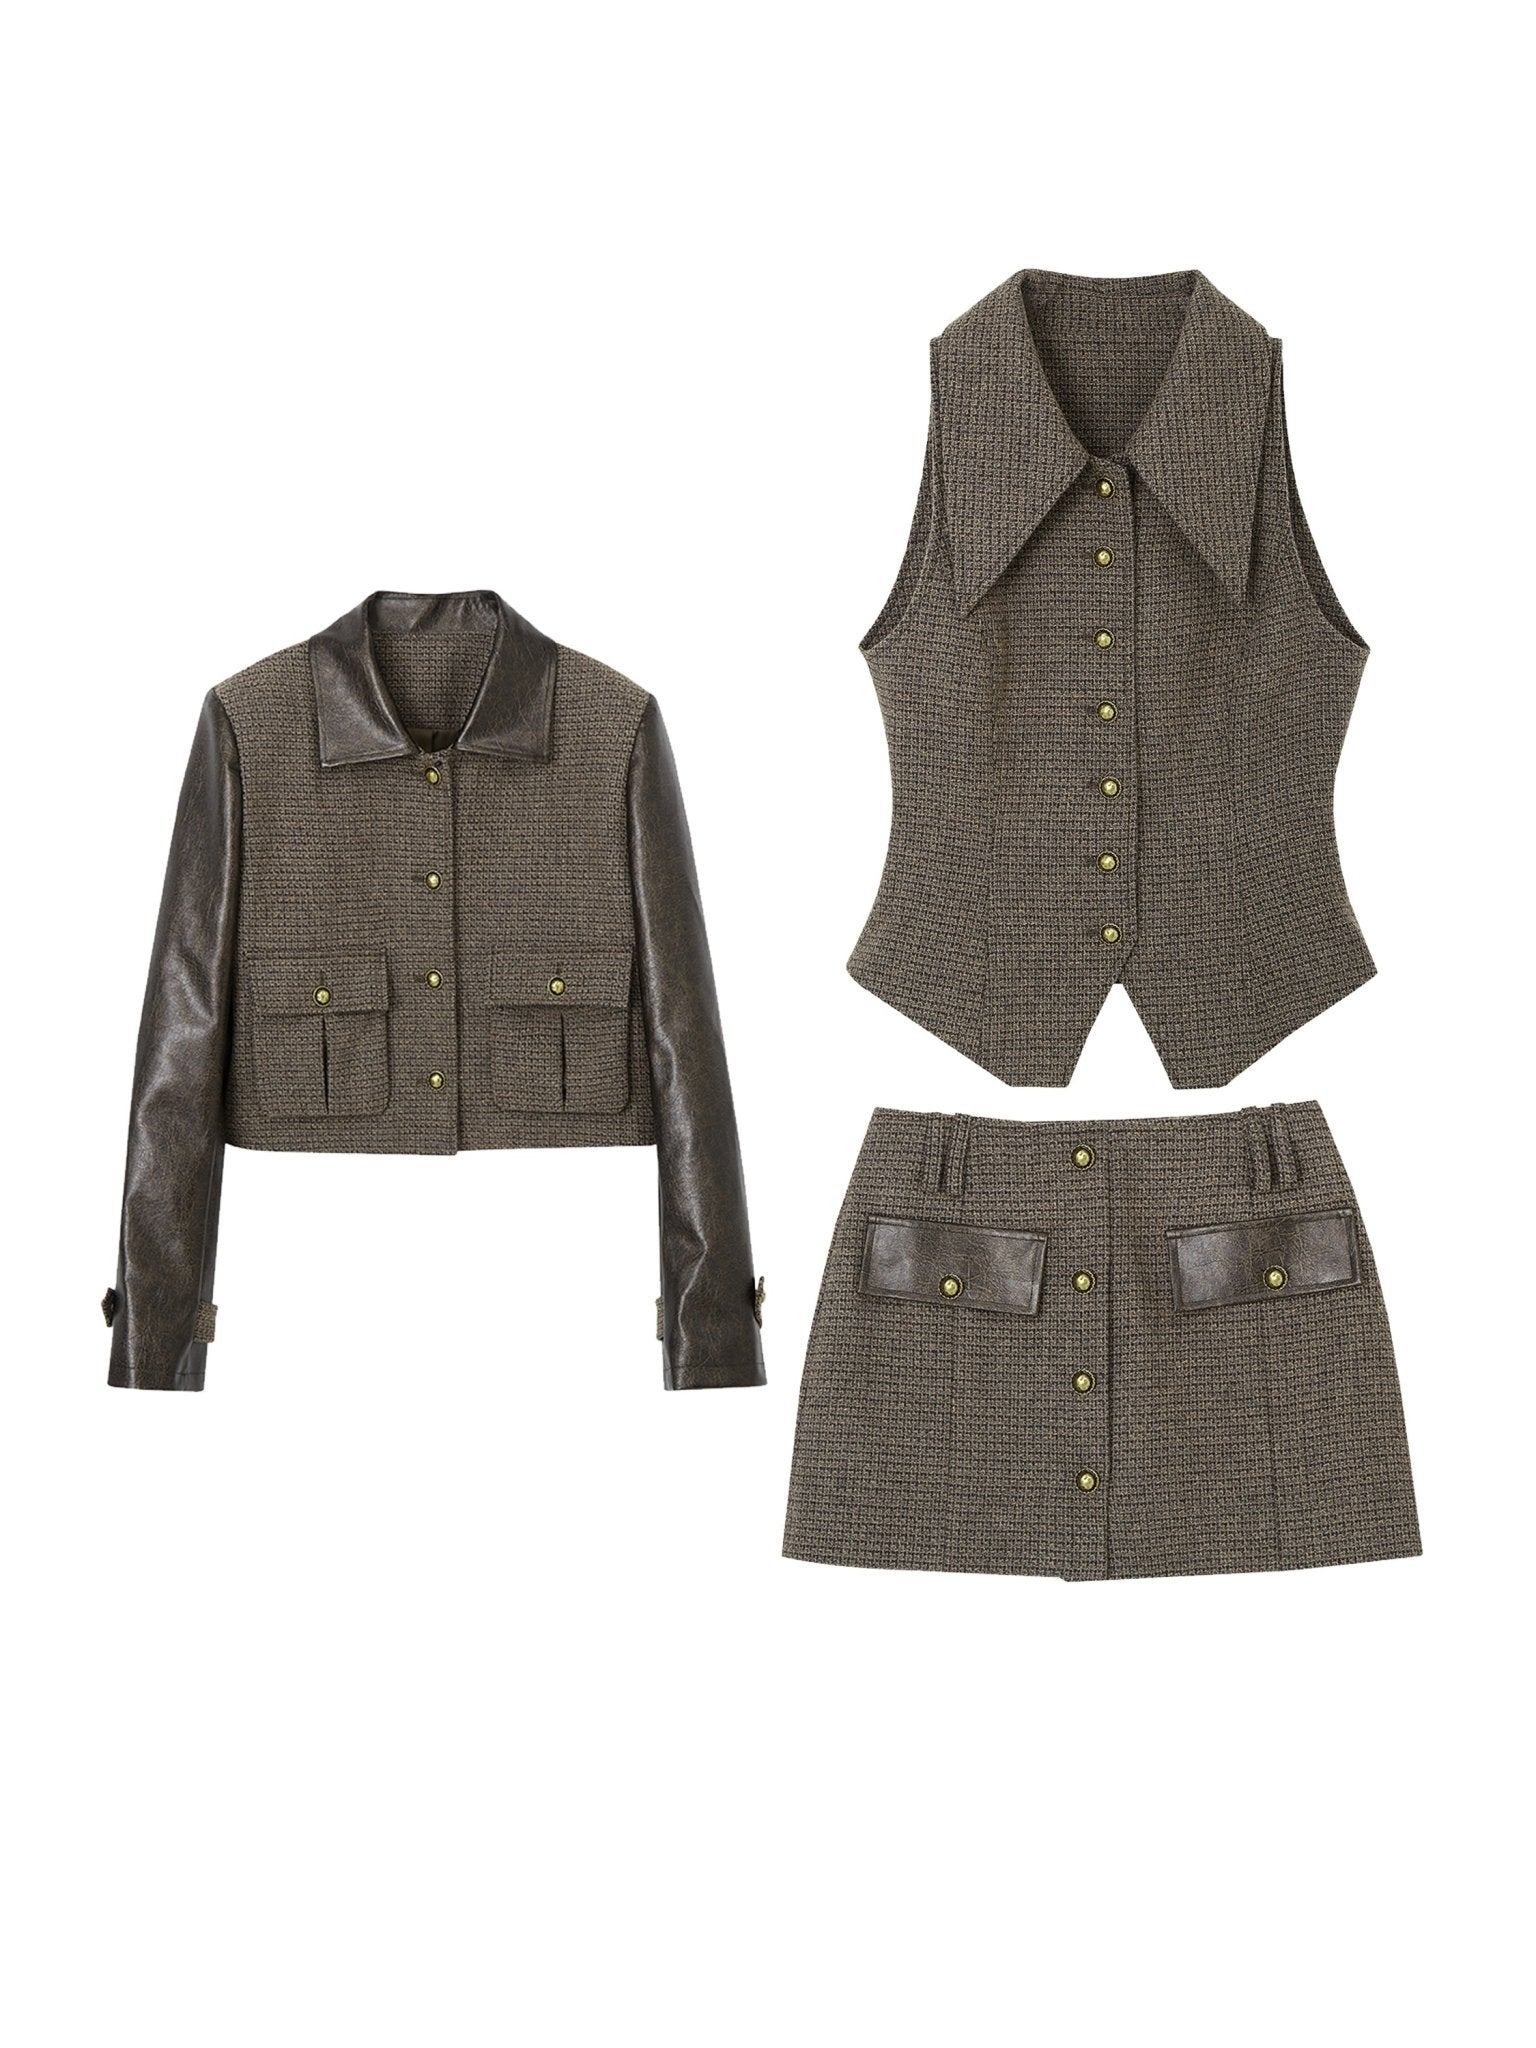 Leather Sleeve Jacket, Vest, And Mini Skirt Set - chiclara